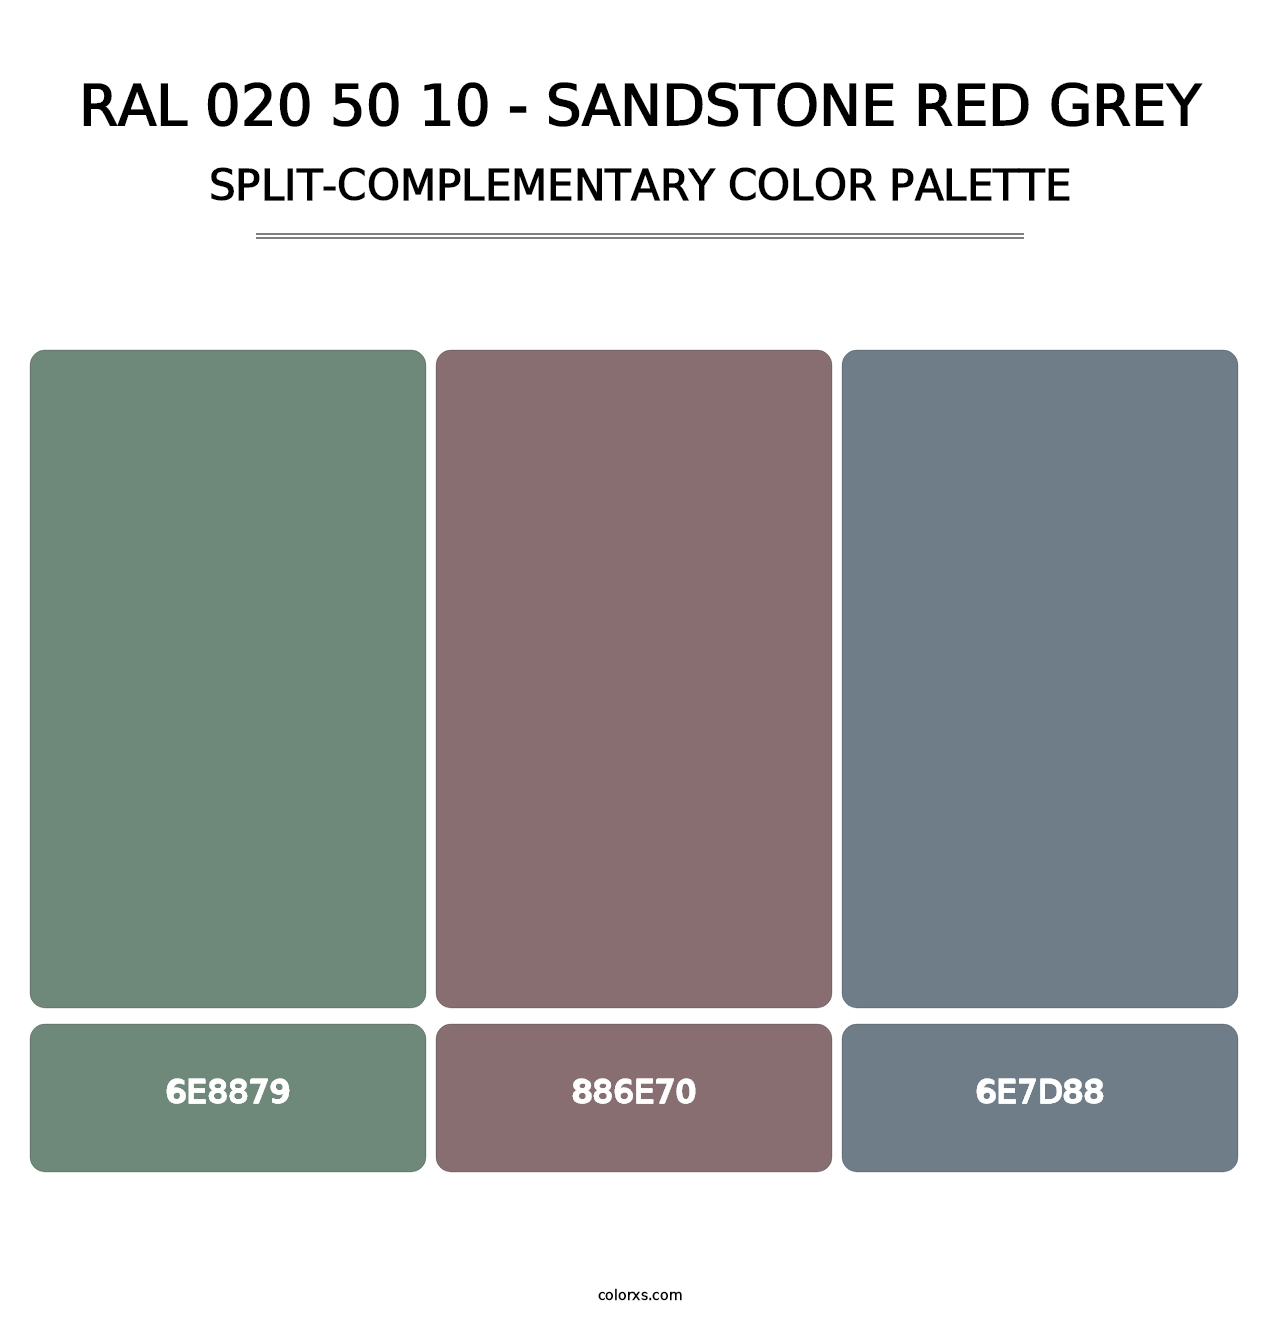 RAL 020 50 10 - Sandstone Red Grey - Split-Complementary Color Palette